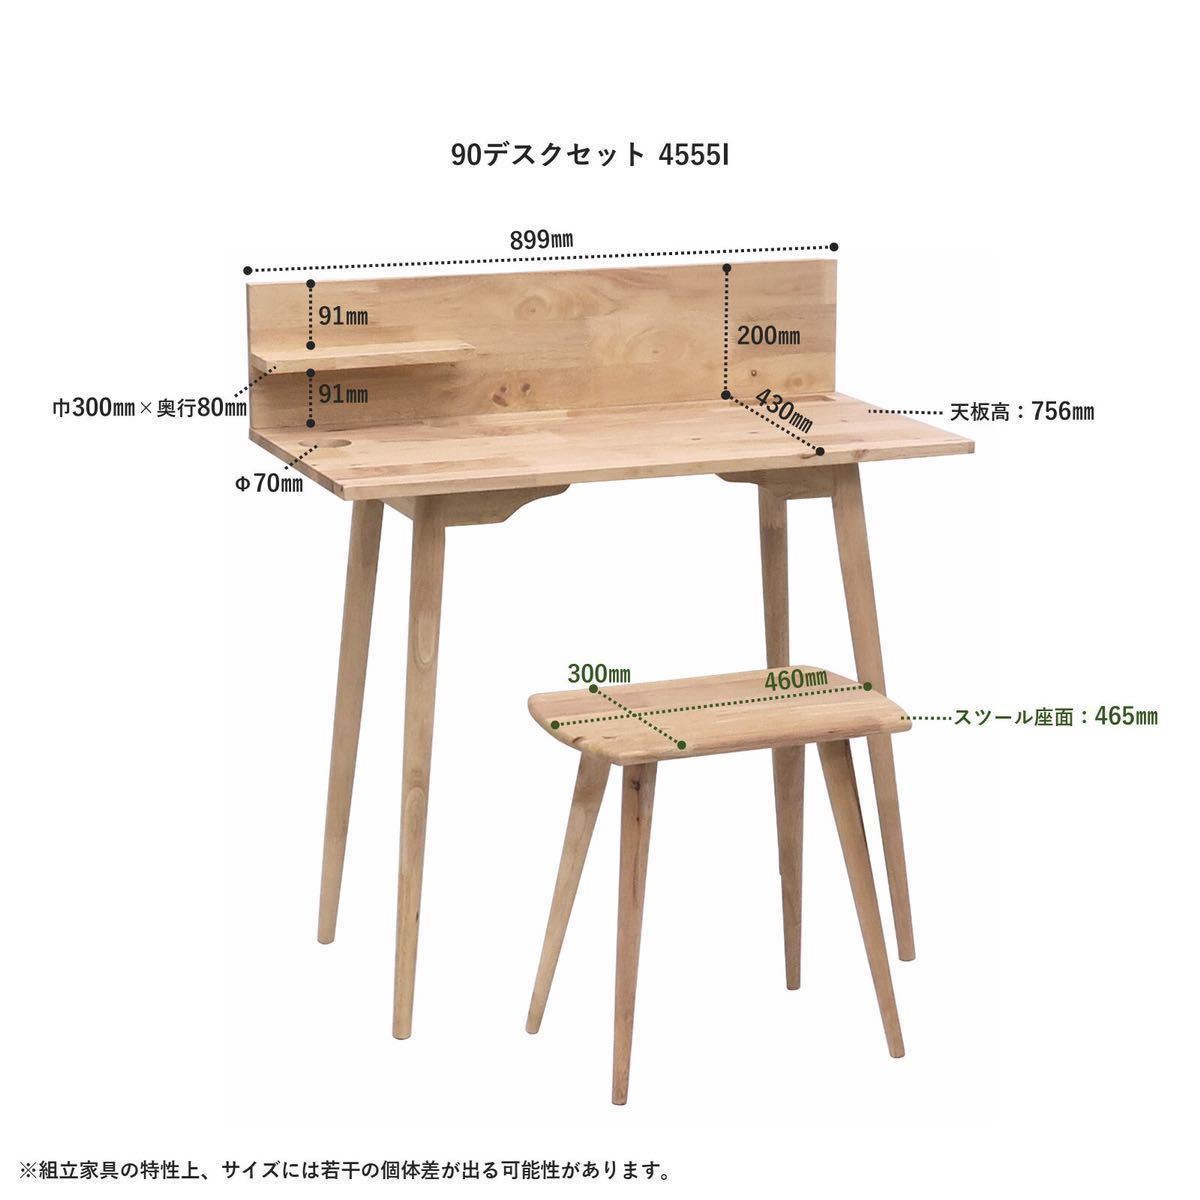 [ free shipping ] Northern Europe natural wood desk &s tool set width 90 - wooden desk chair office desk . a little over desk computer desk PC desk natural 